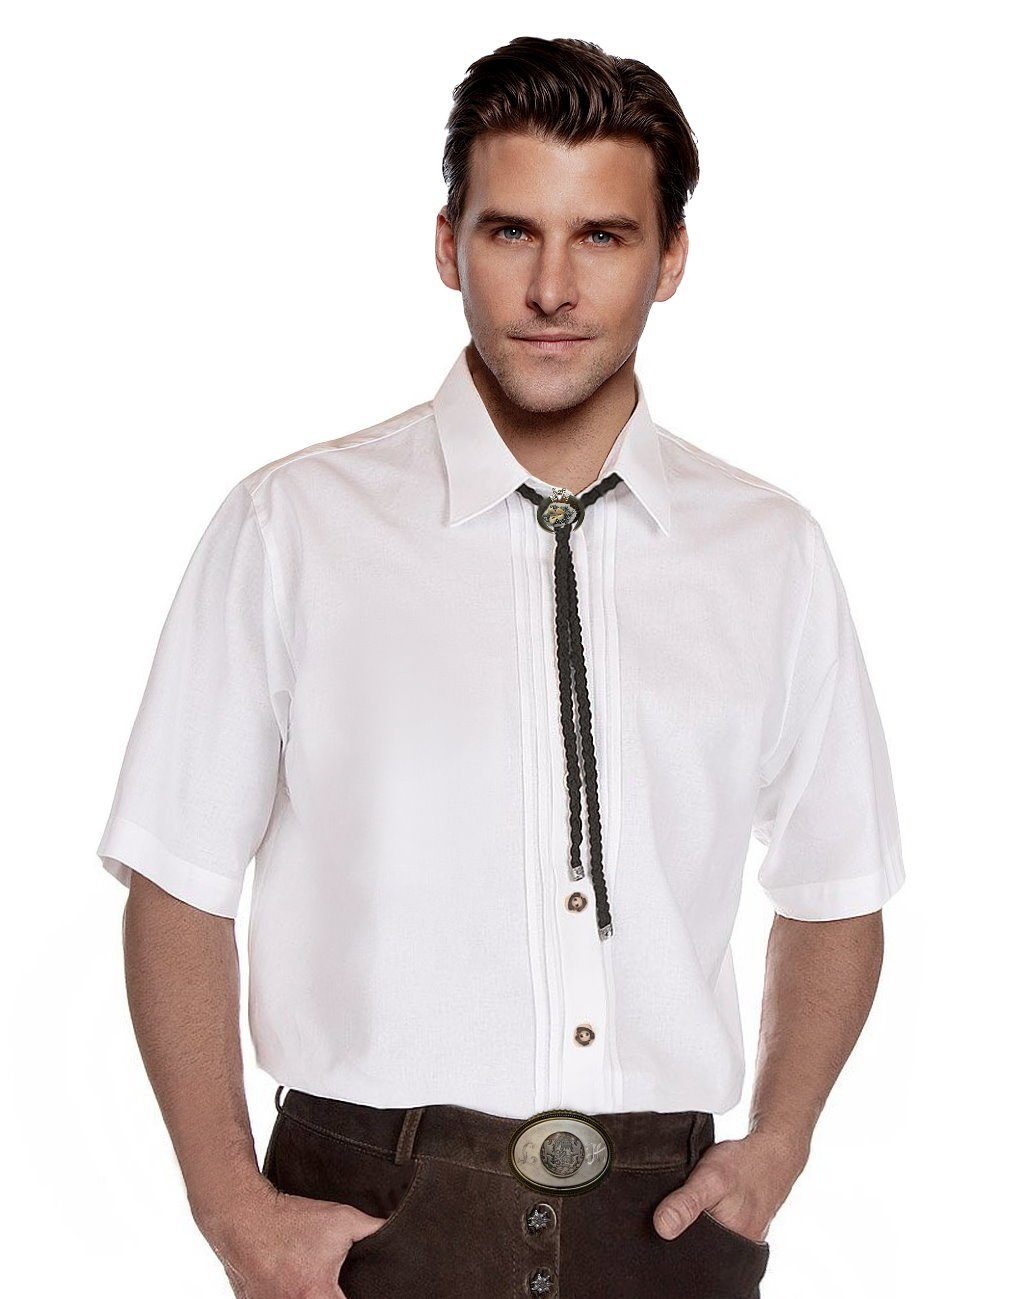 Trachtenhemd Wiesn-Hemd Moschen-Bayern Herrenhemd mit Trachtenhemd klassischen Herren Kurzarm Weiß Biesen